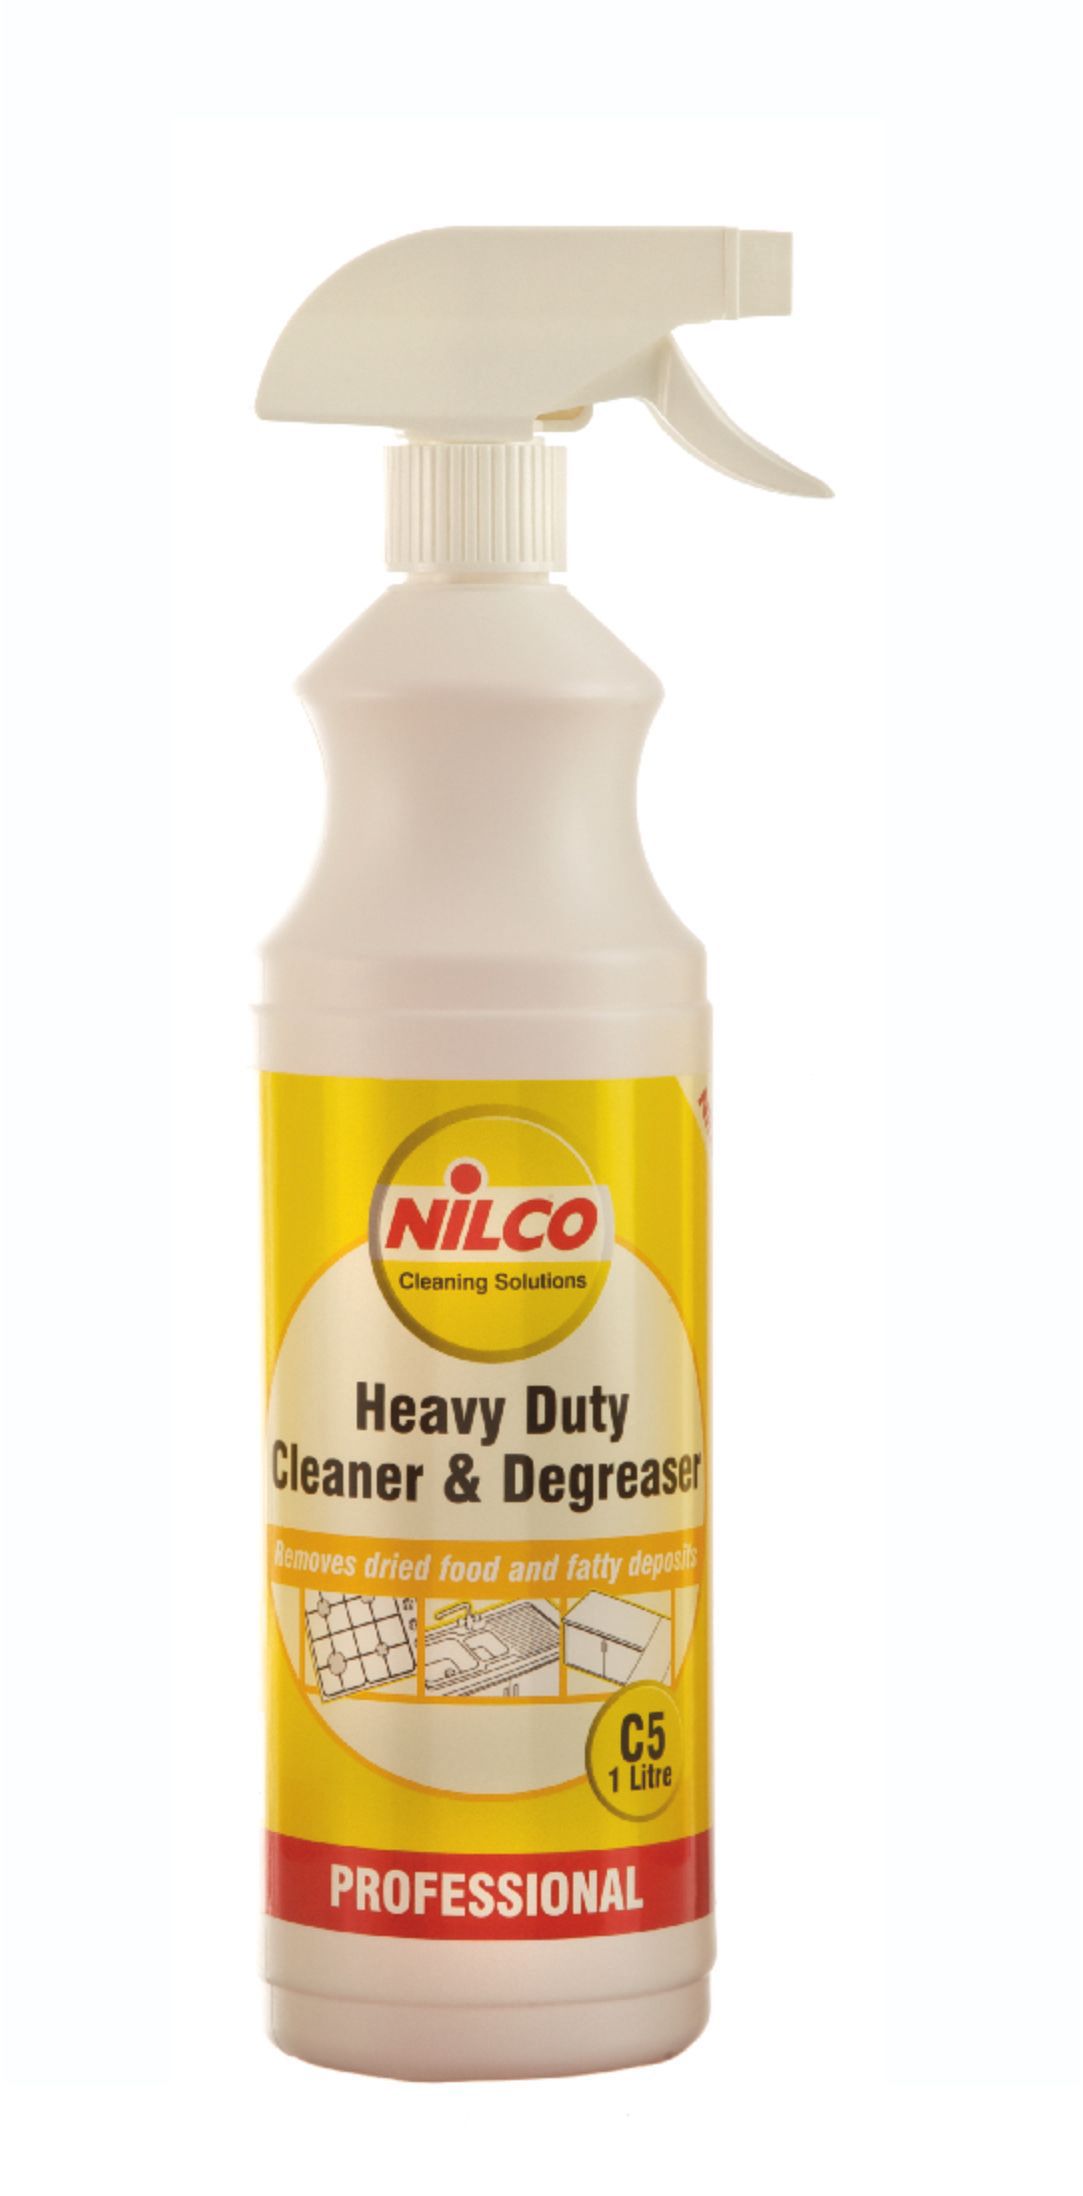 Nilco Kitchen cleaner & degreaser